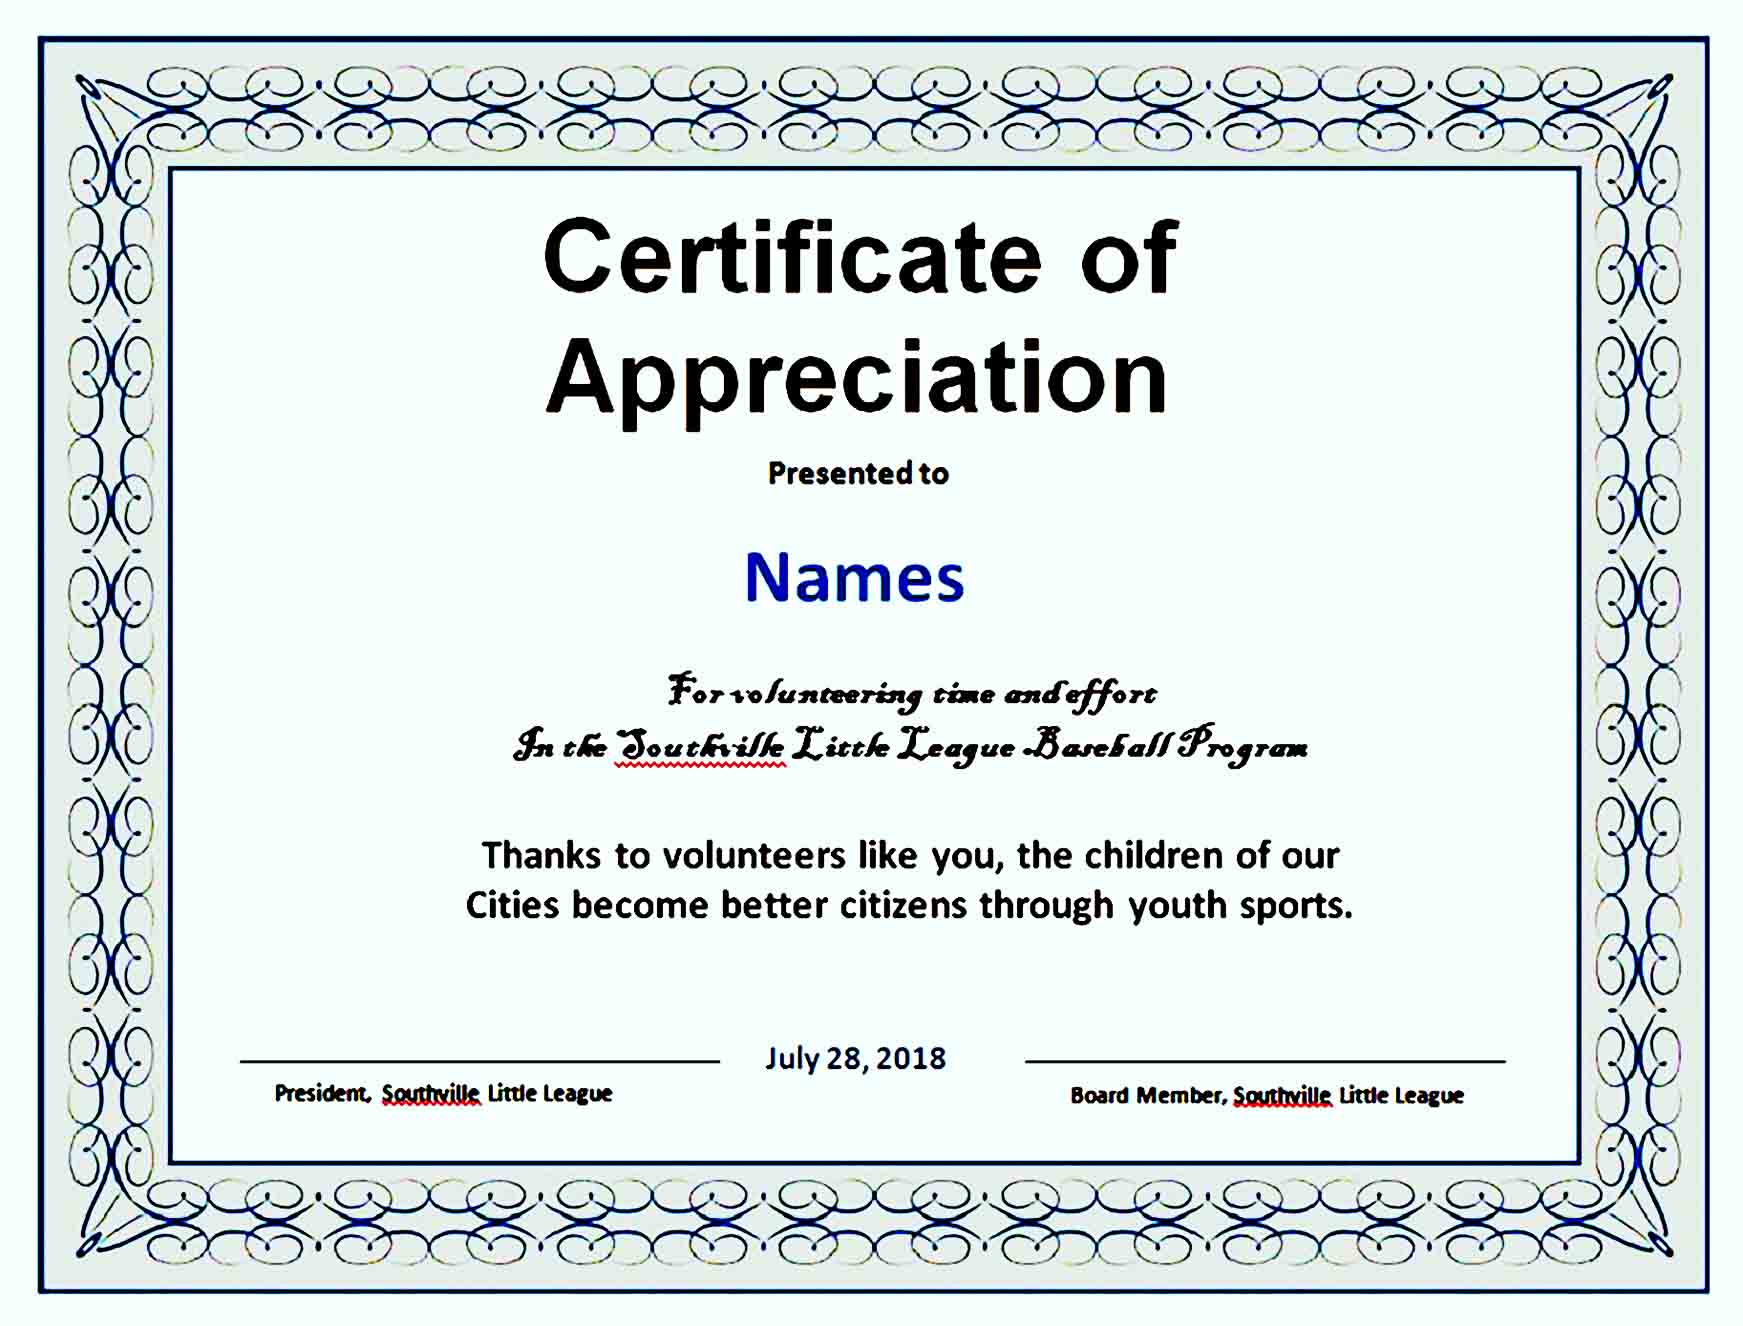 Certificate of Appreciation 13